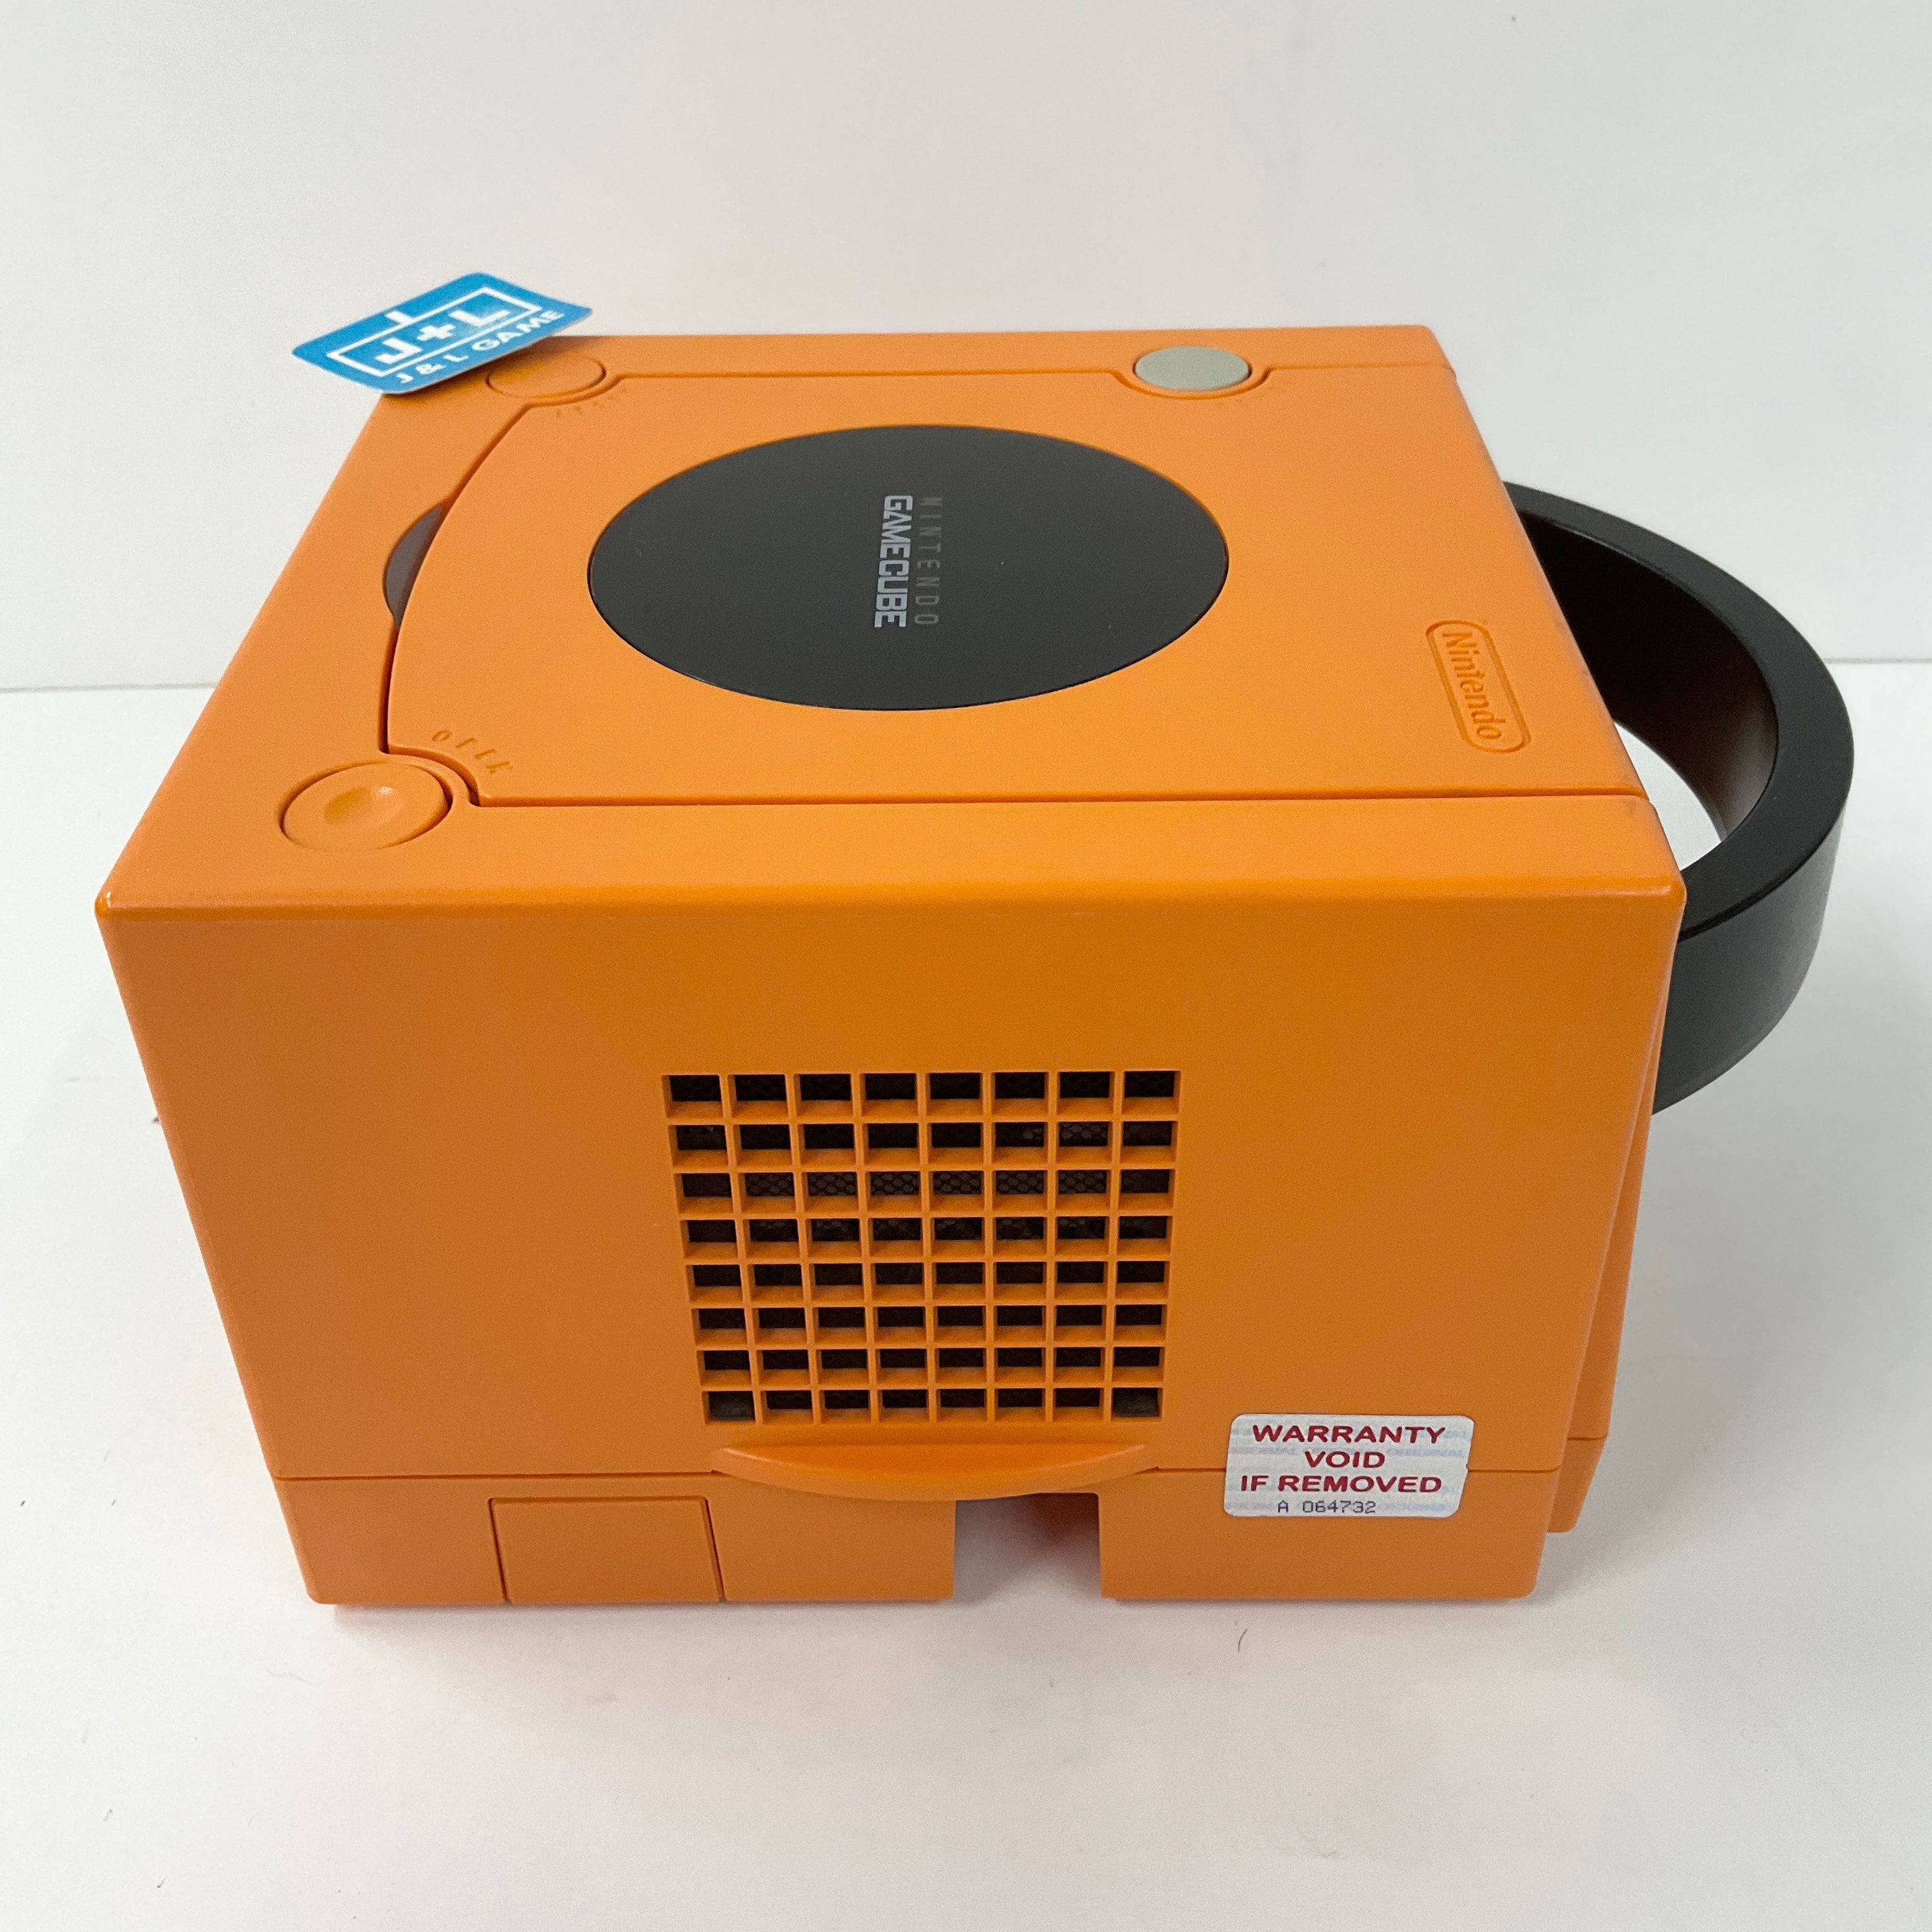 Nintendo Gamecube Console Spice Orange (Japanese Import) - (GC) GameCube [Pre-Owned] Consoles Nintendo   